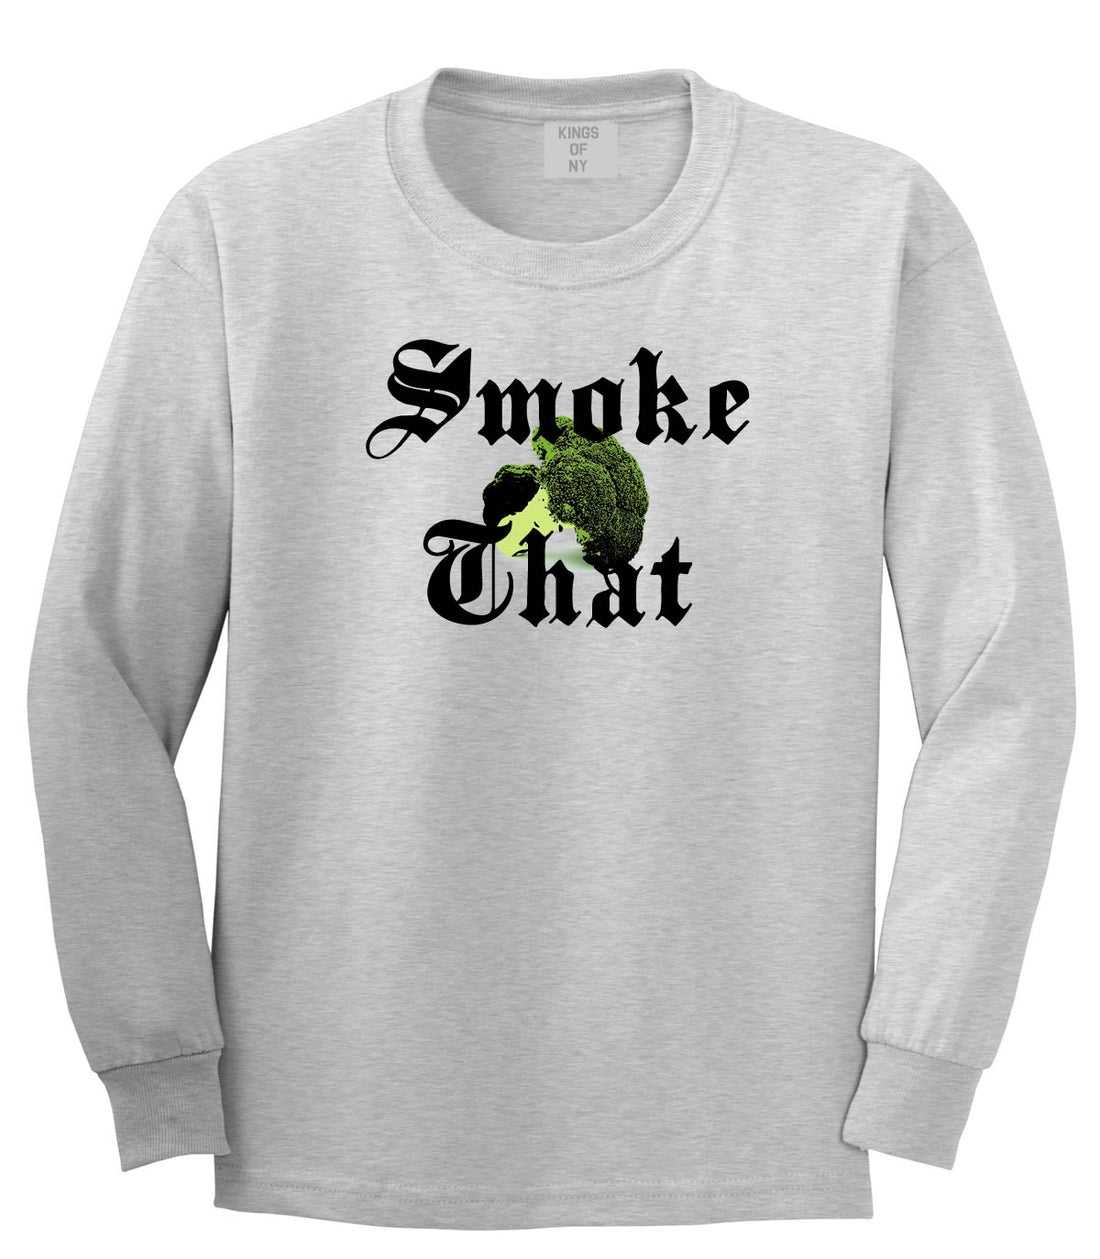 Smoke That Broccoli Long Sleeve T-Shirt